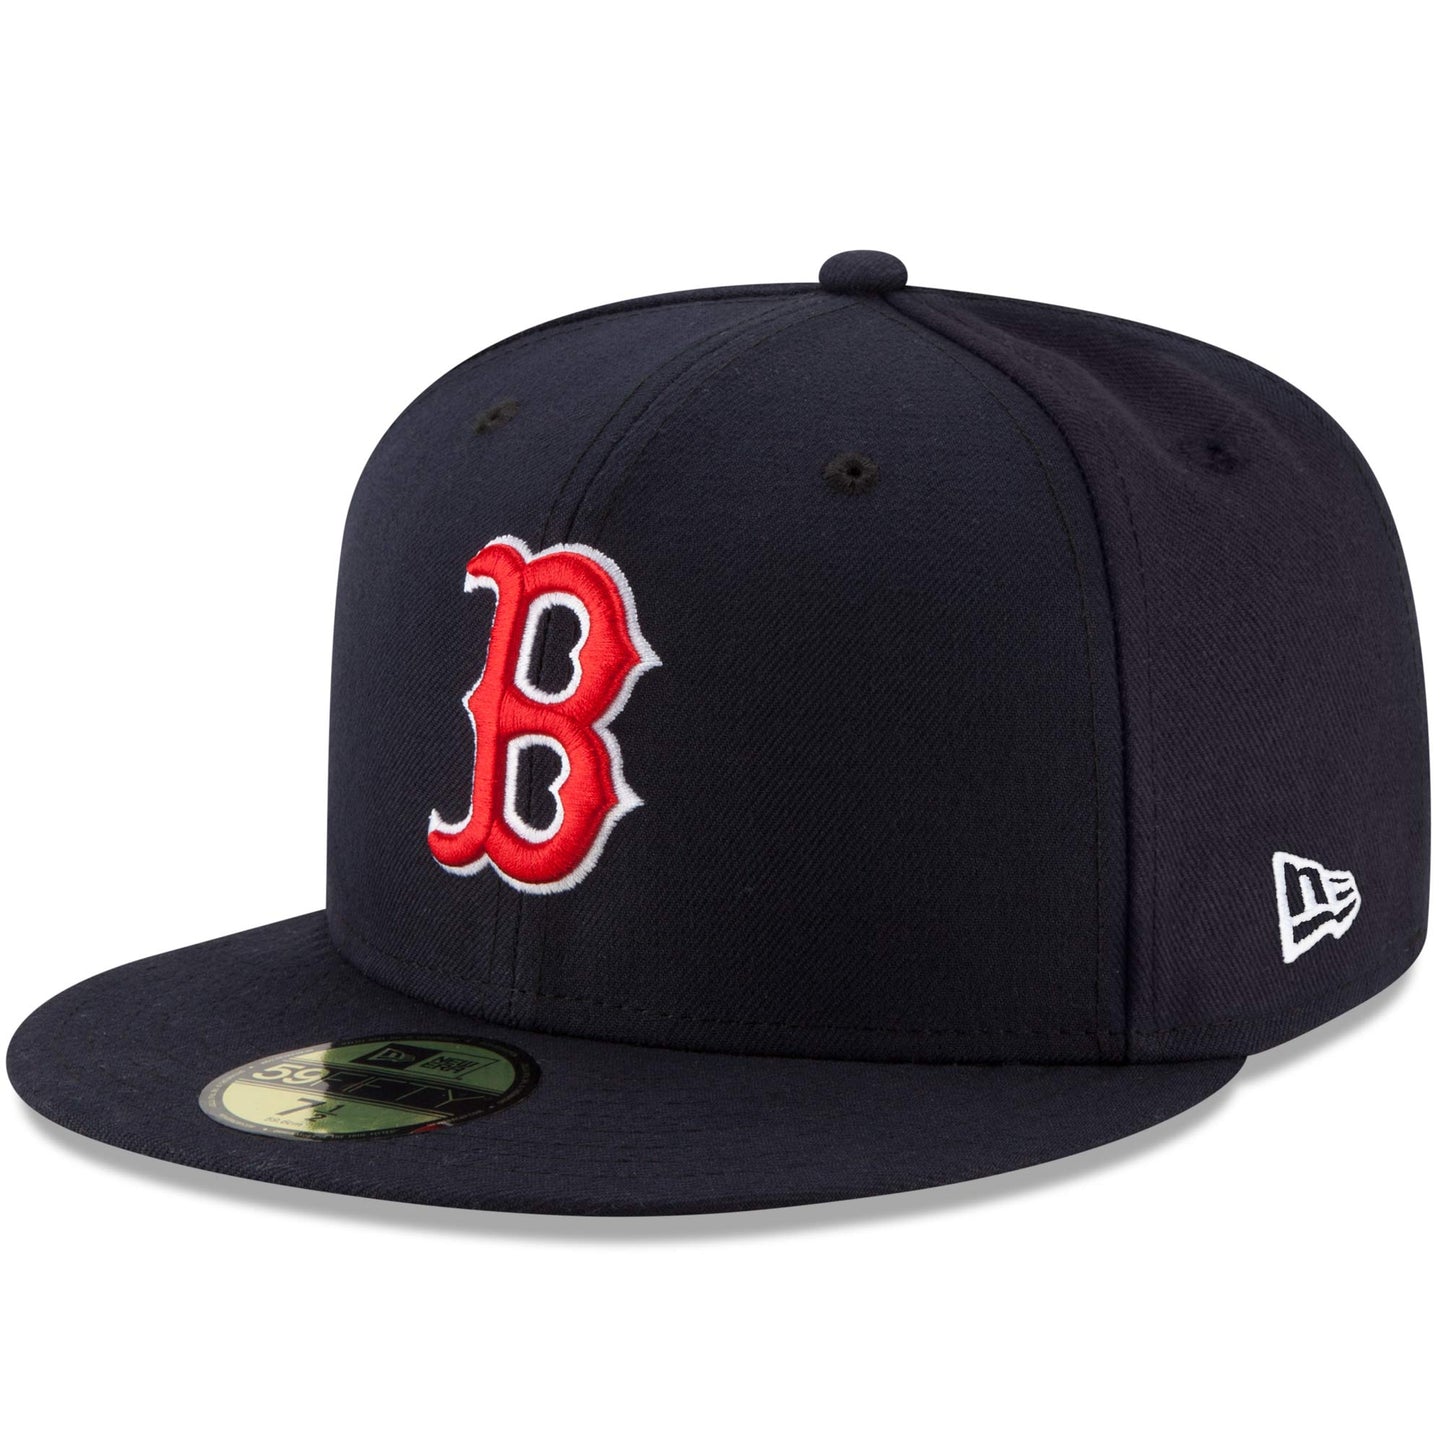 New Era 59FIFTY Boston Red Sox